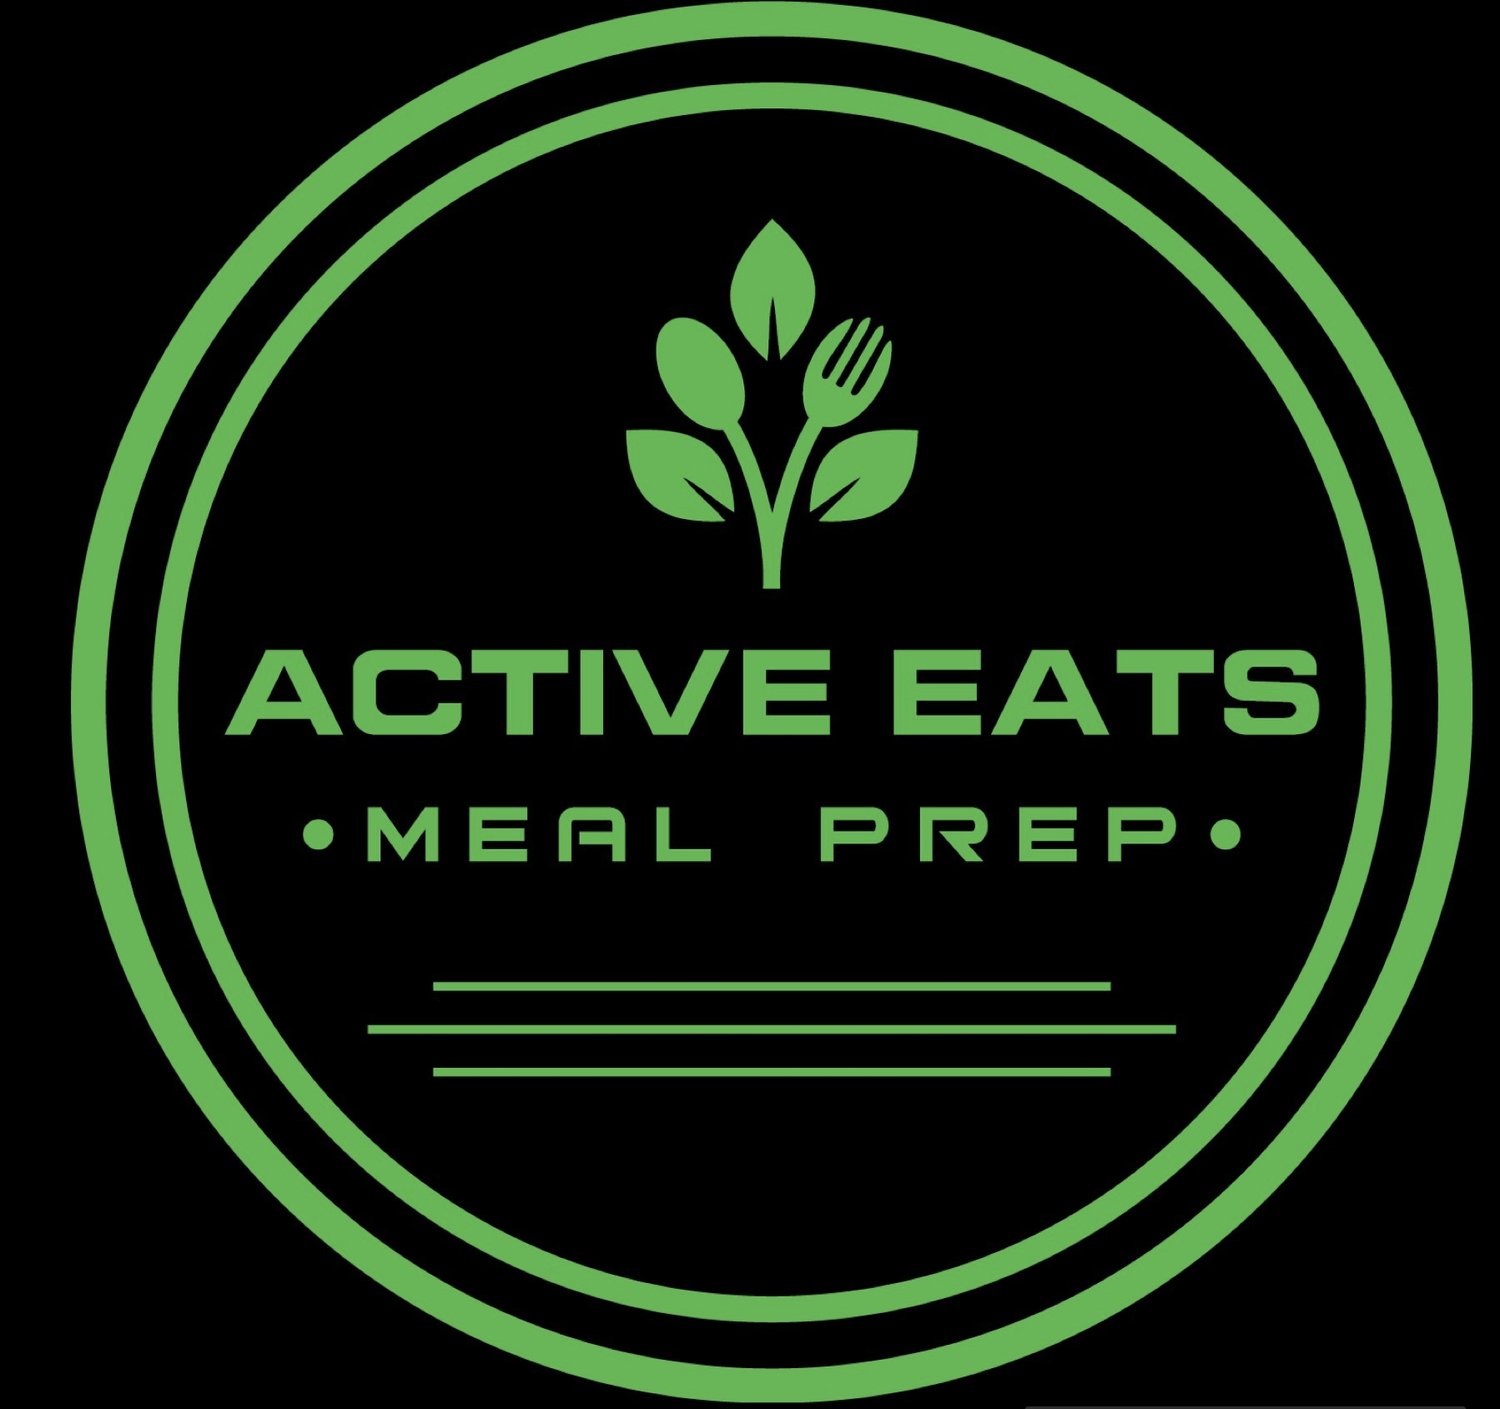 Active Eats